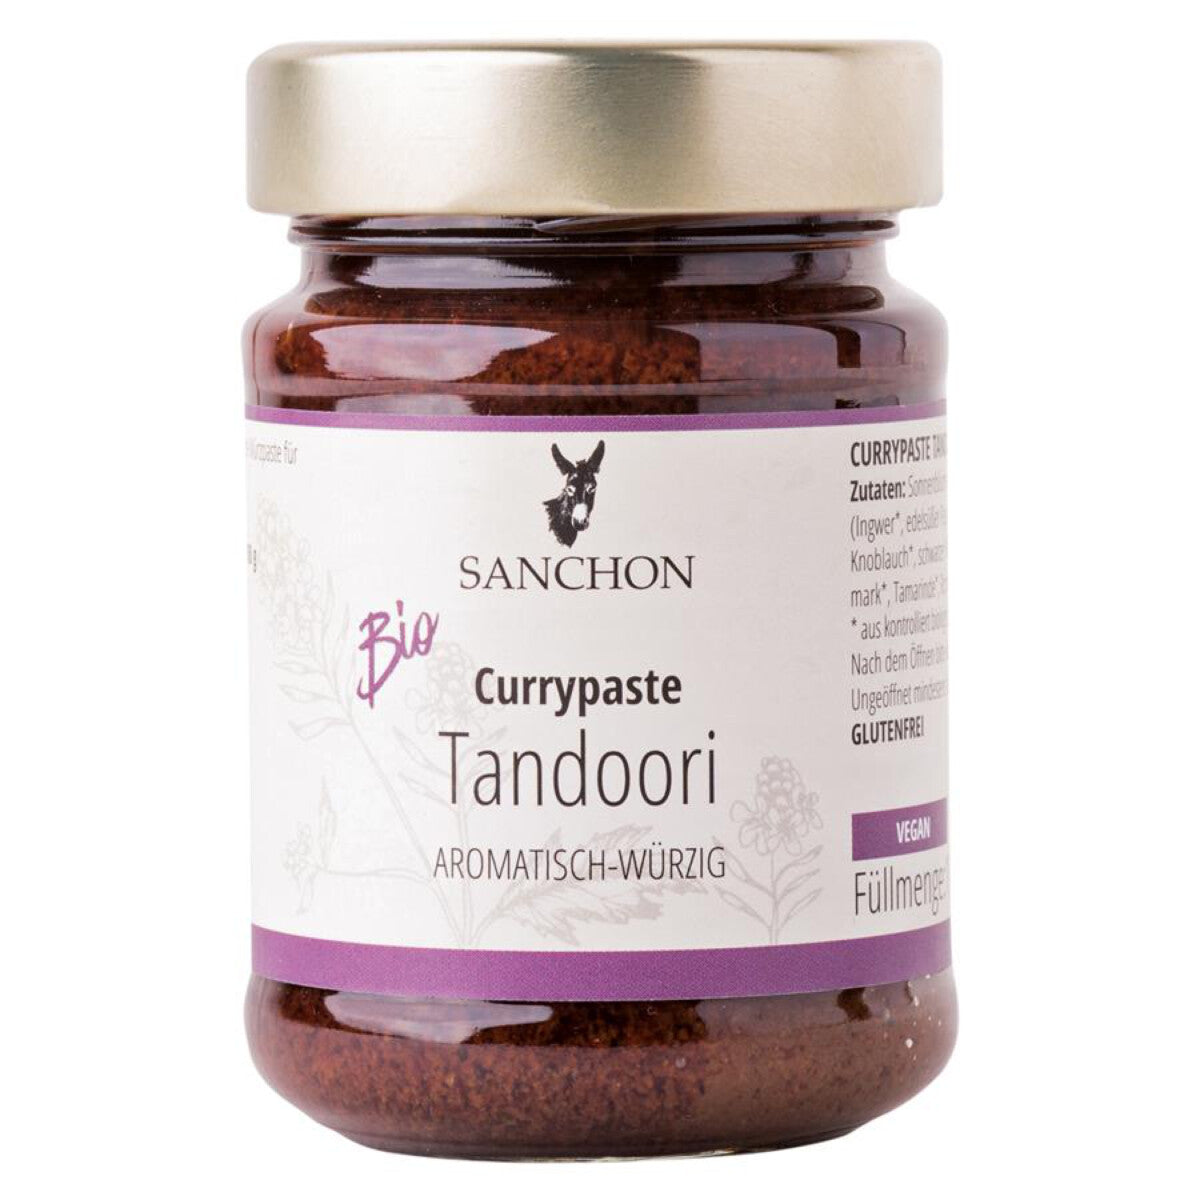 SANCHON Tandoori Currypaste - 190 g